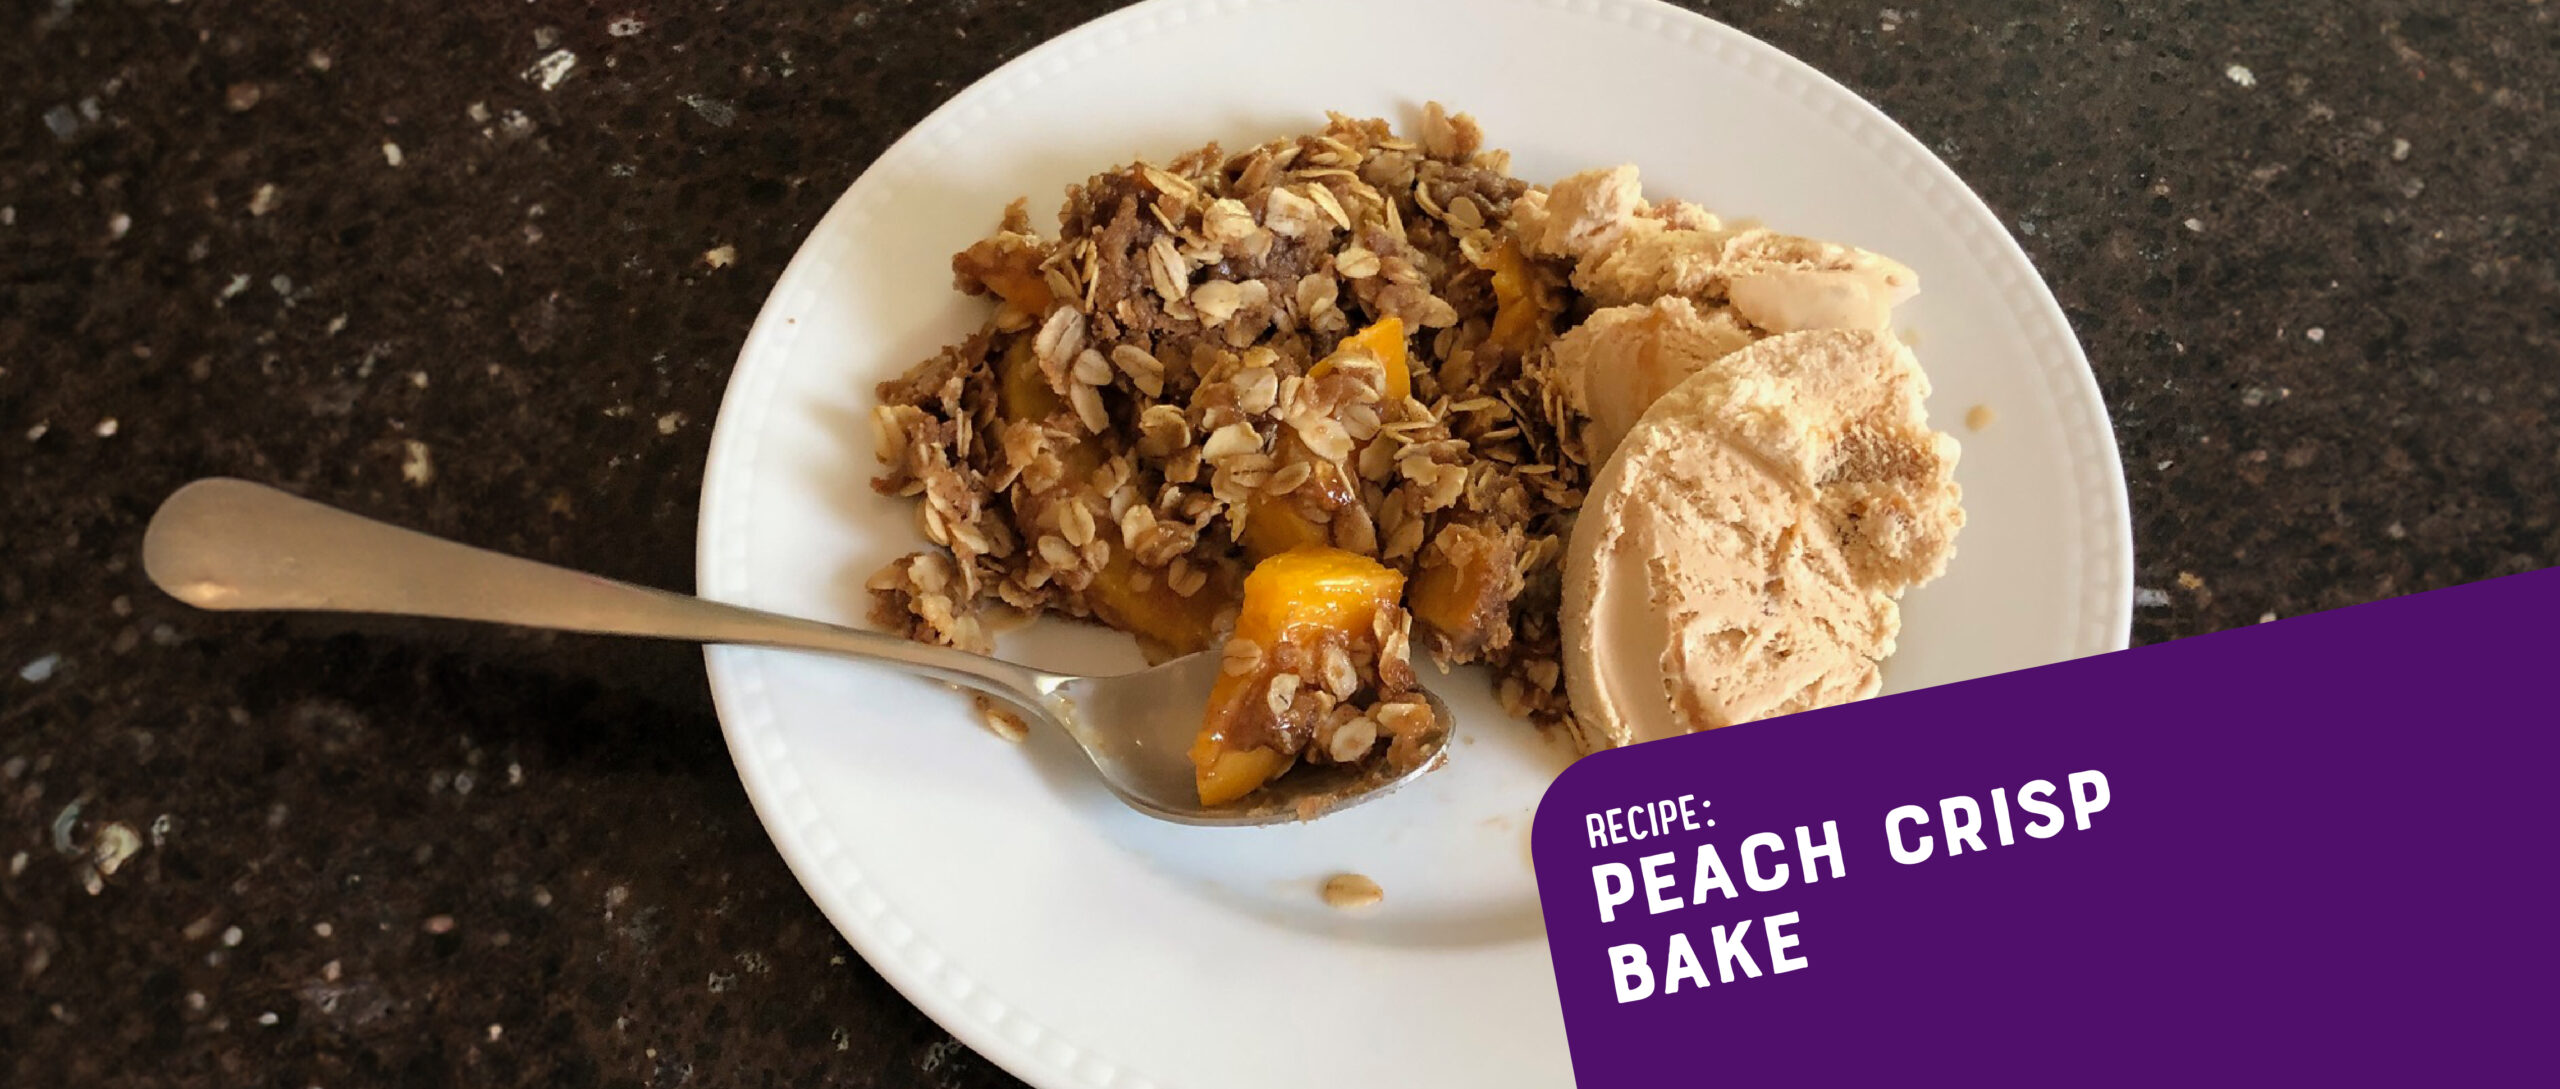 Peach Crisp Bake Recipe